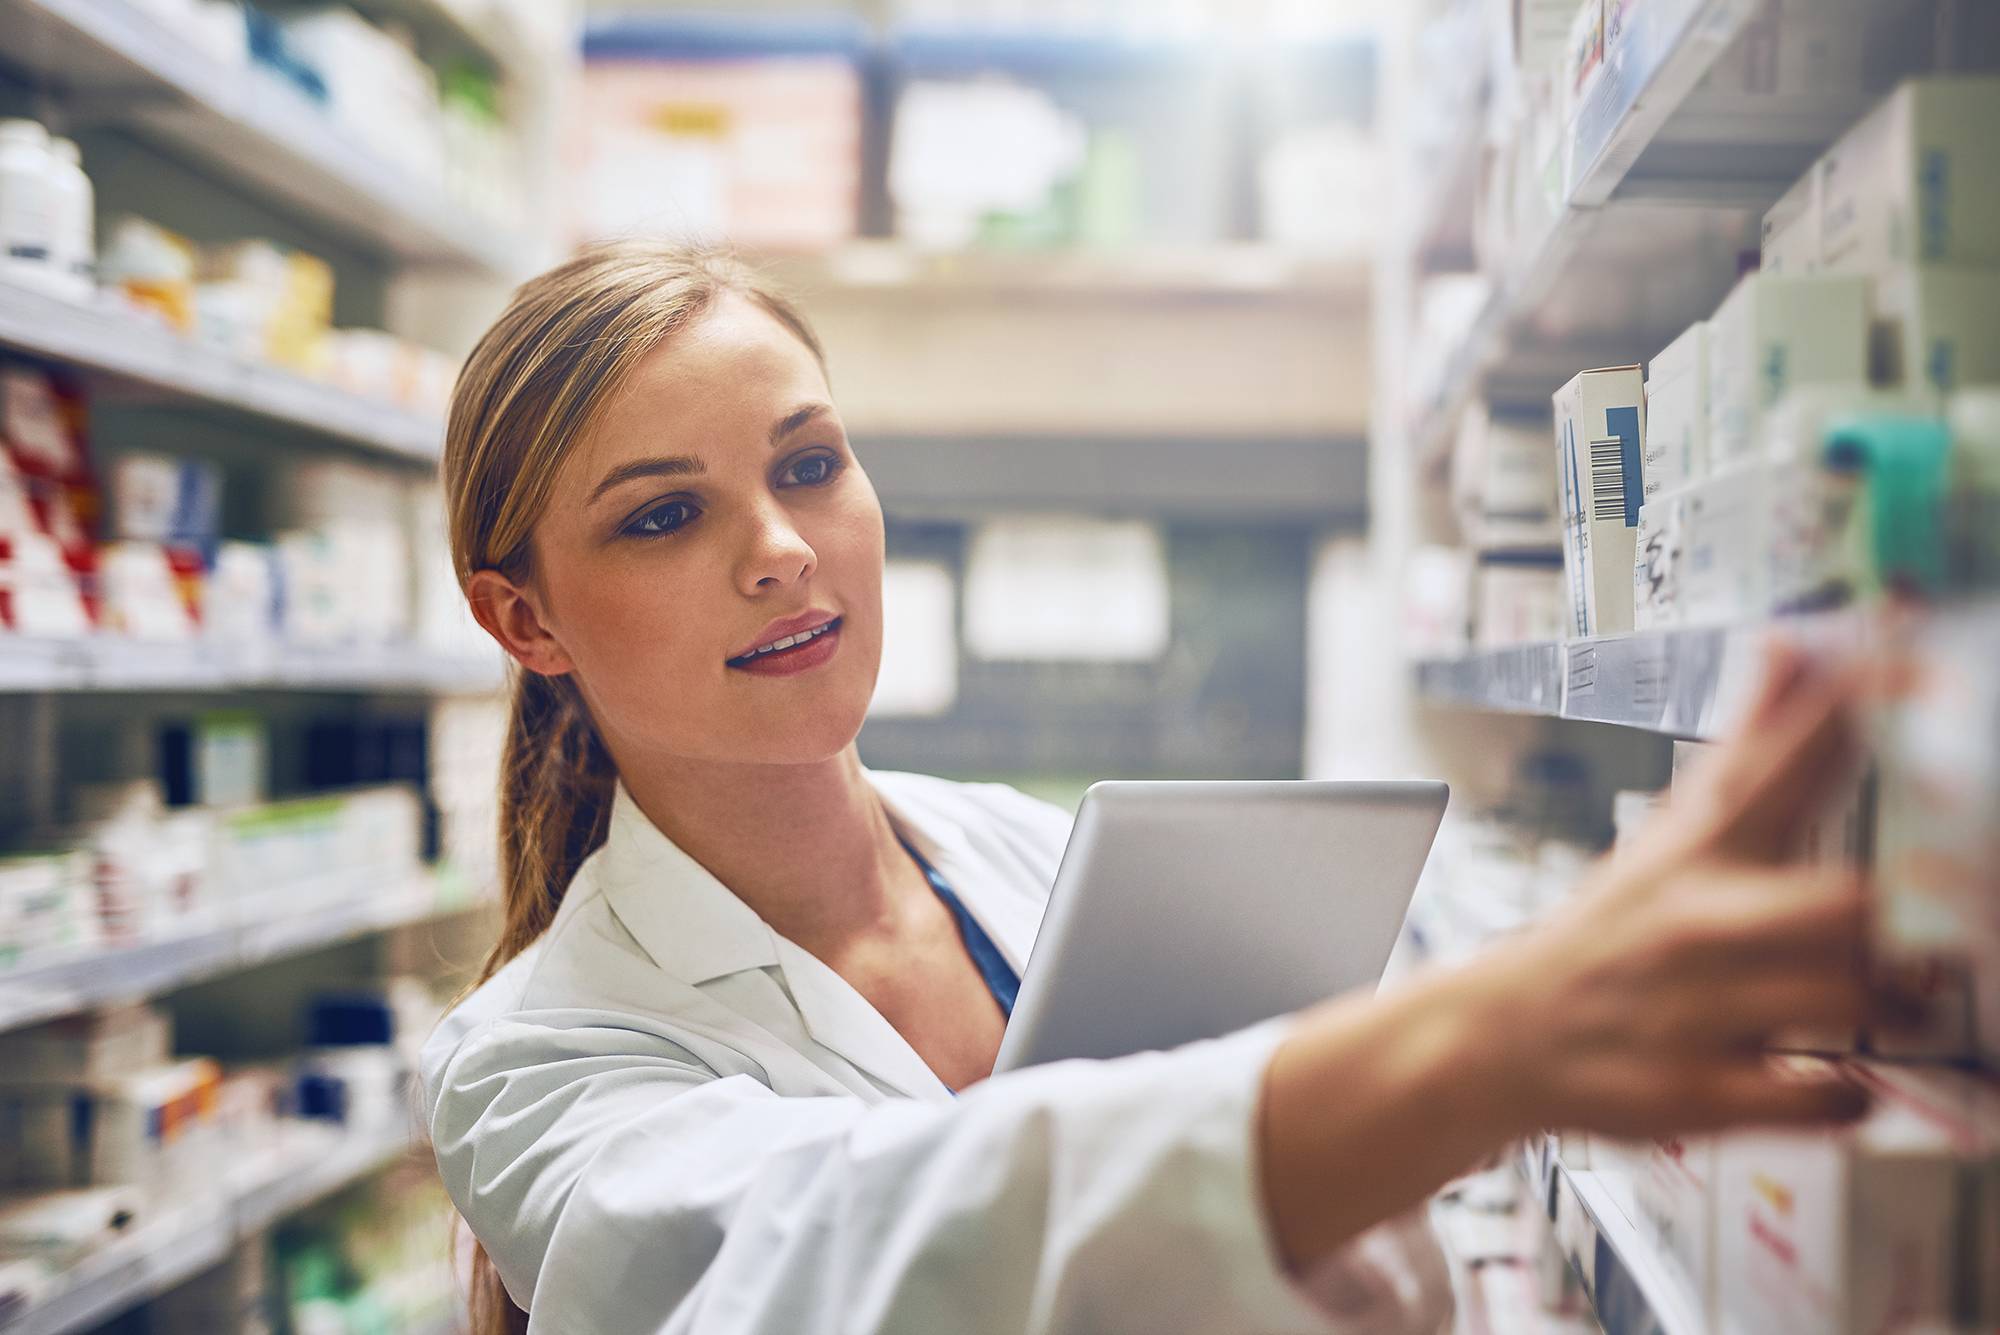 A pharmacist selecting medication